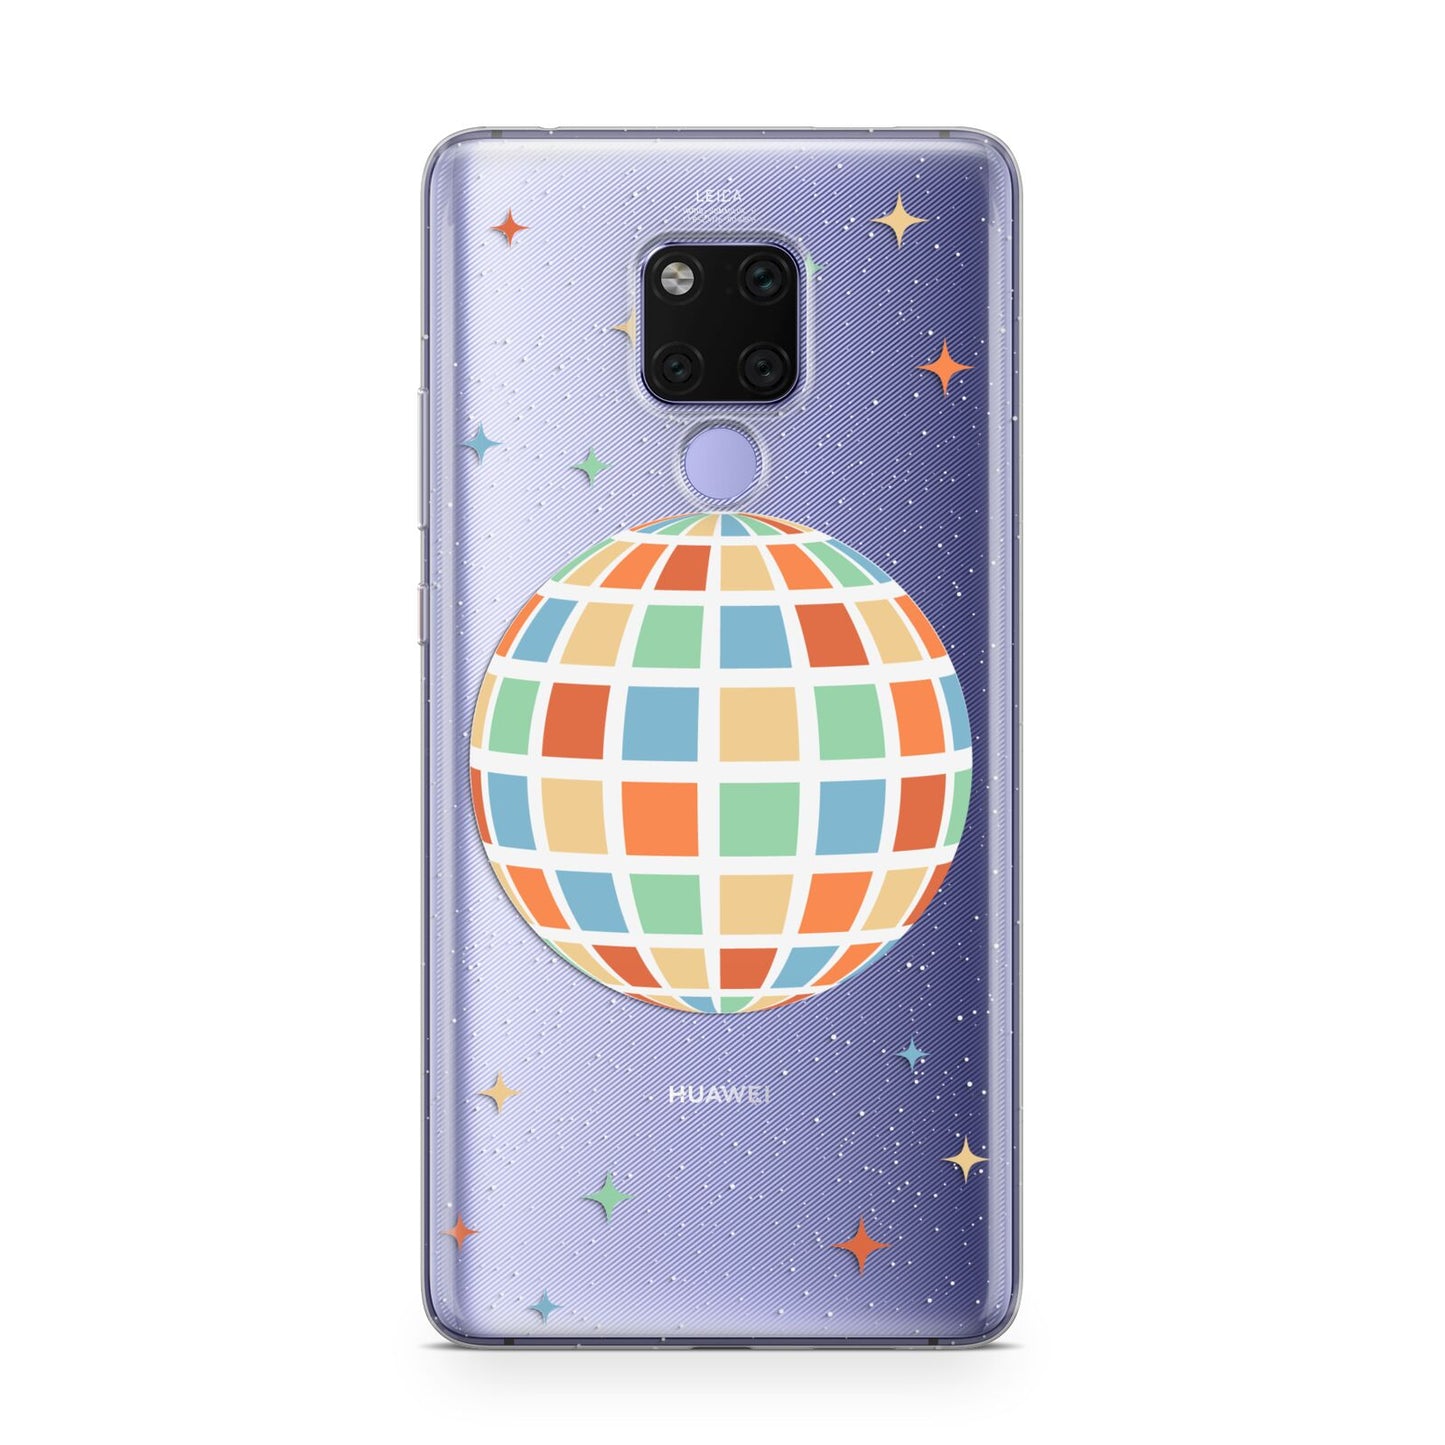 Disco Ball Huawei Mate 20X Phone Case